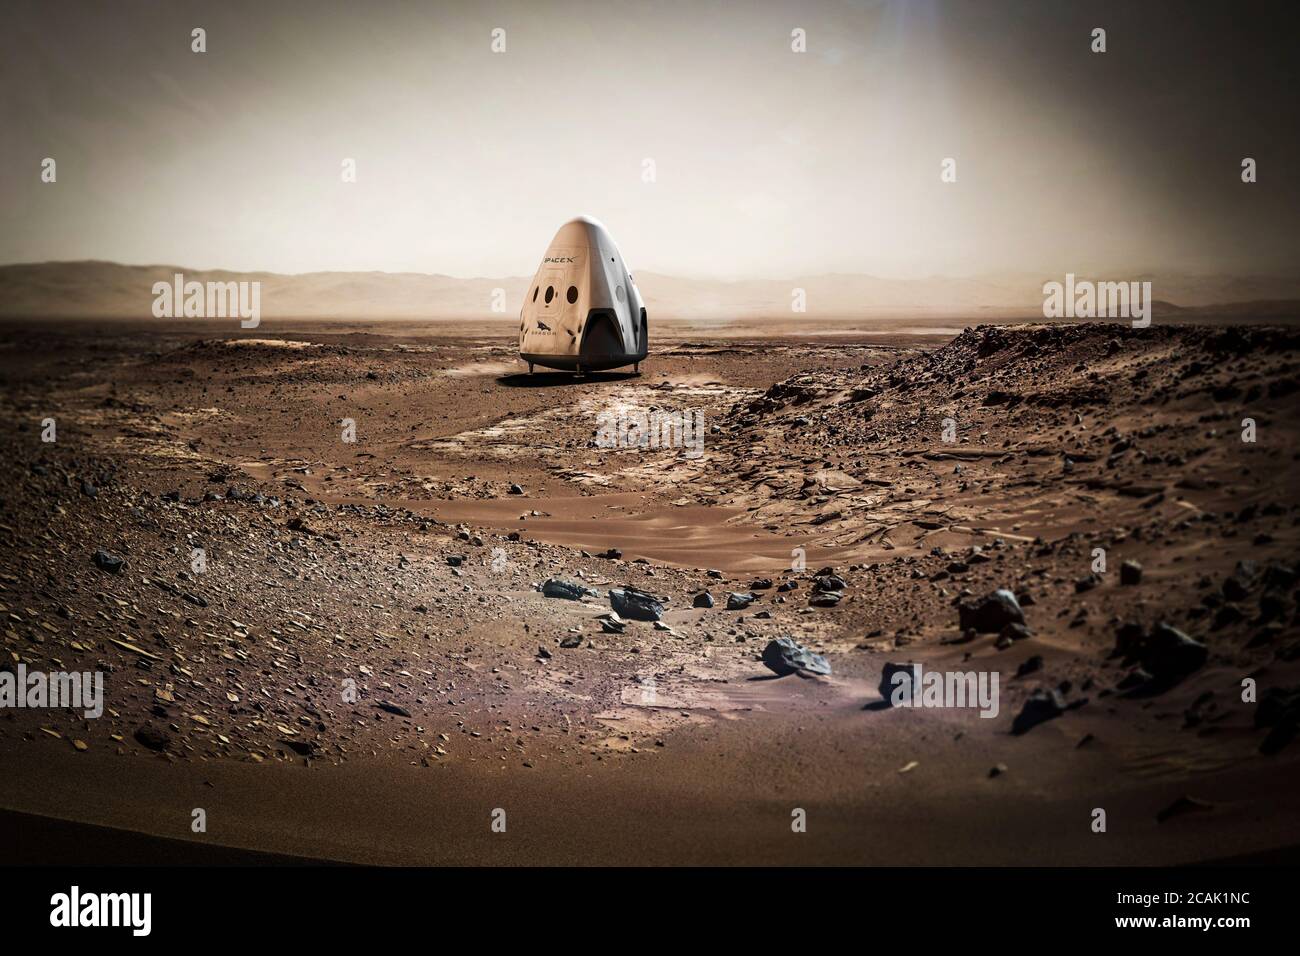 Dragon to Mars (2015). Concept art of sending Dragon to Mars. 3 Stock Photo